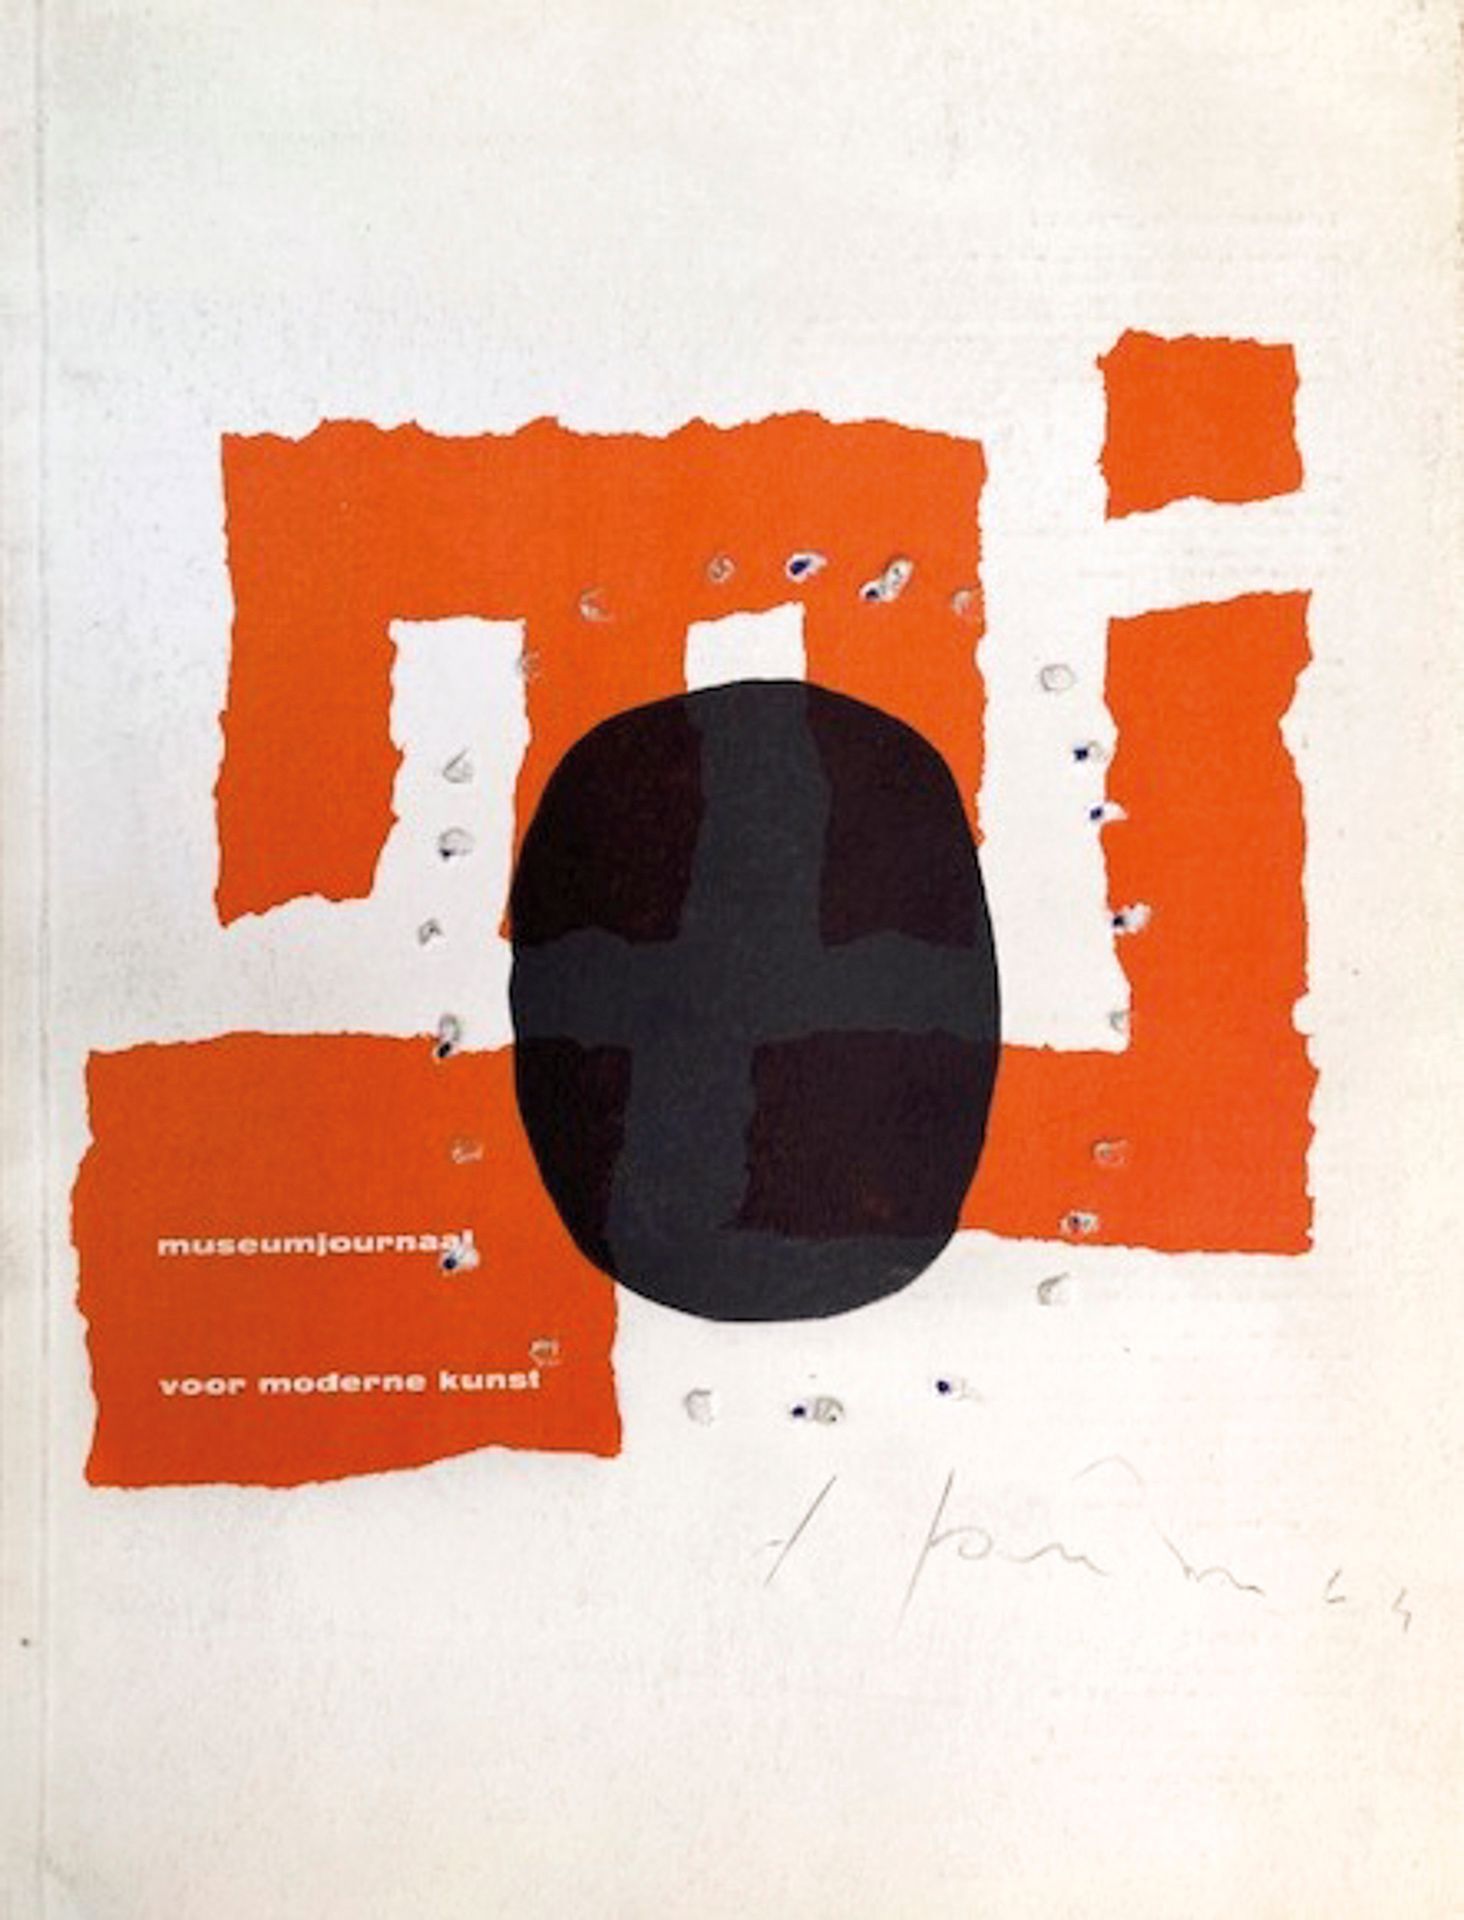 LUCIO FONTANA 现代艺术博物馆，1964年；方塔纳的绘画作品，25 x 19厘米_x000D_。

封面上的图案是由艺术家Henk Peeters和&hellip;